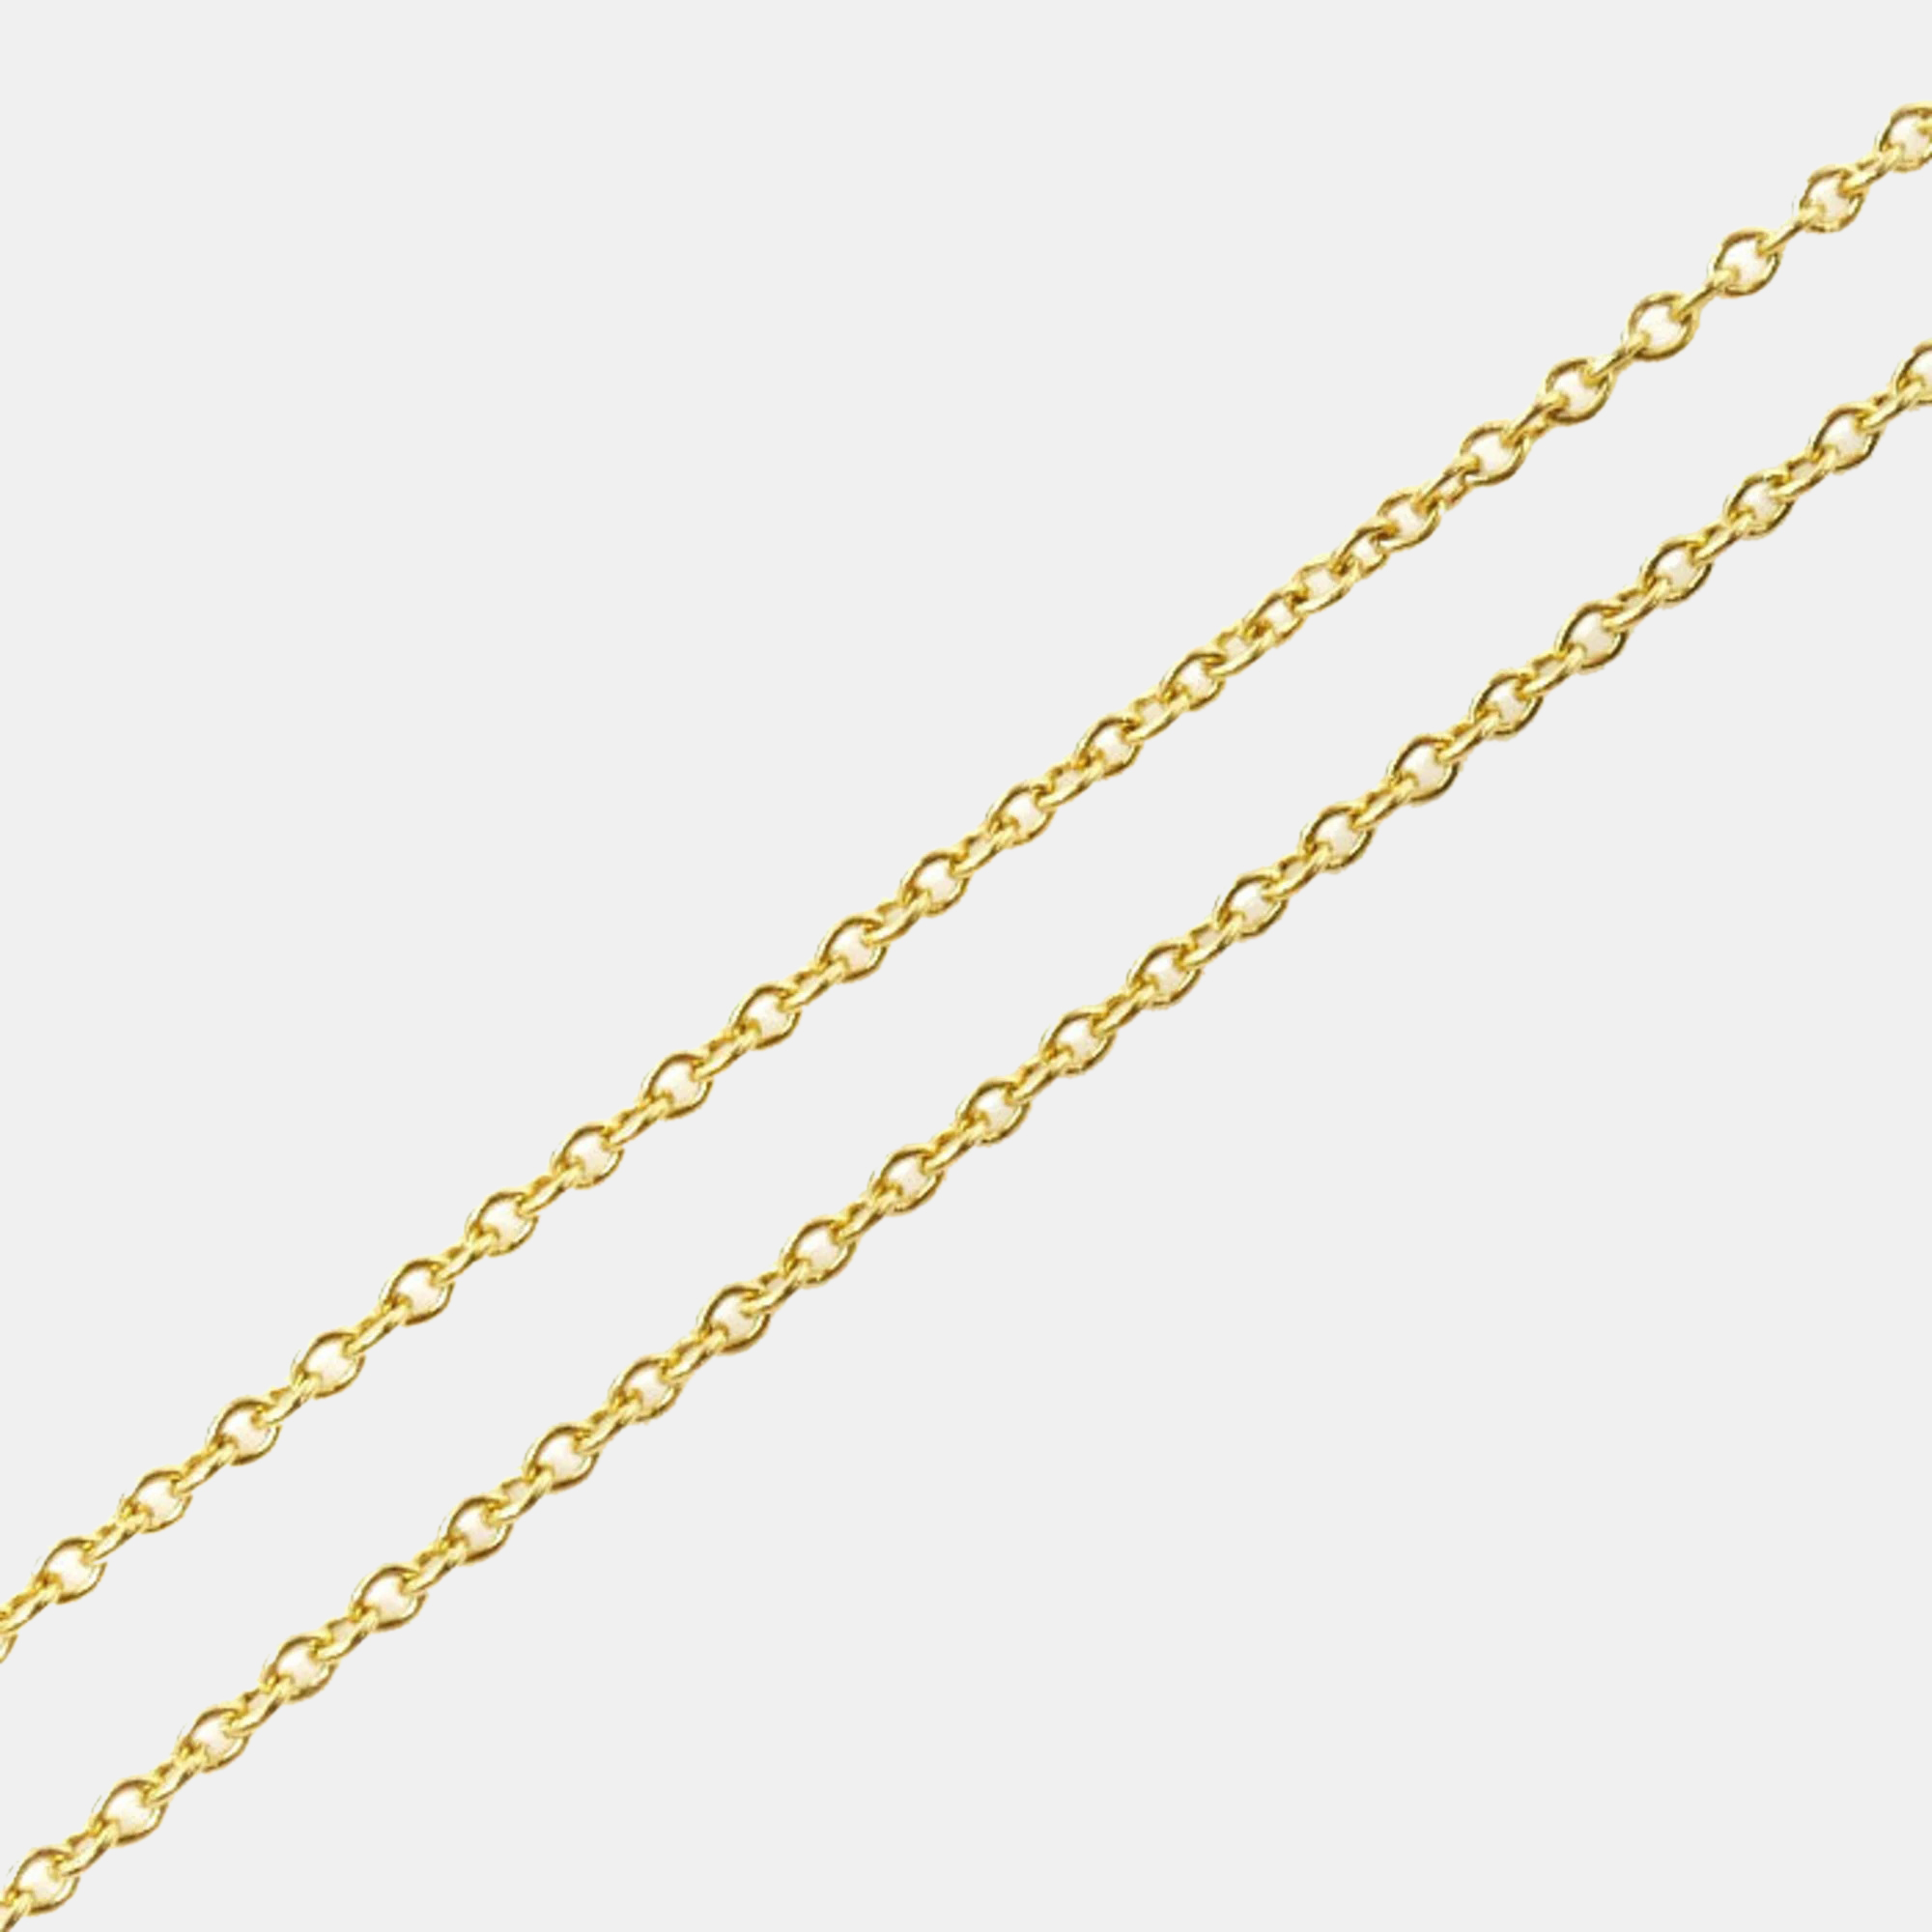 Tiffany & Co. 18K Yellow Gold And Diamond Elsa Peretti Open Heart Pendant Necklace